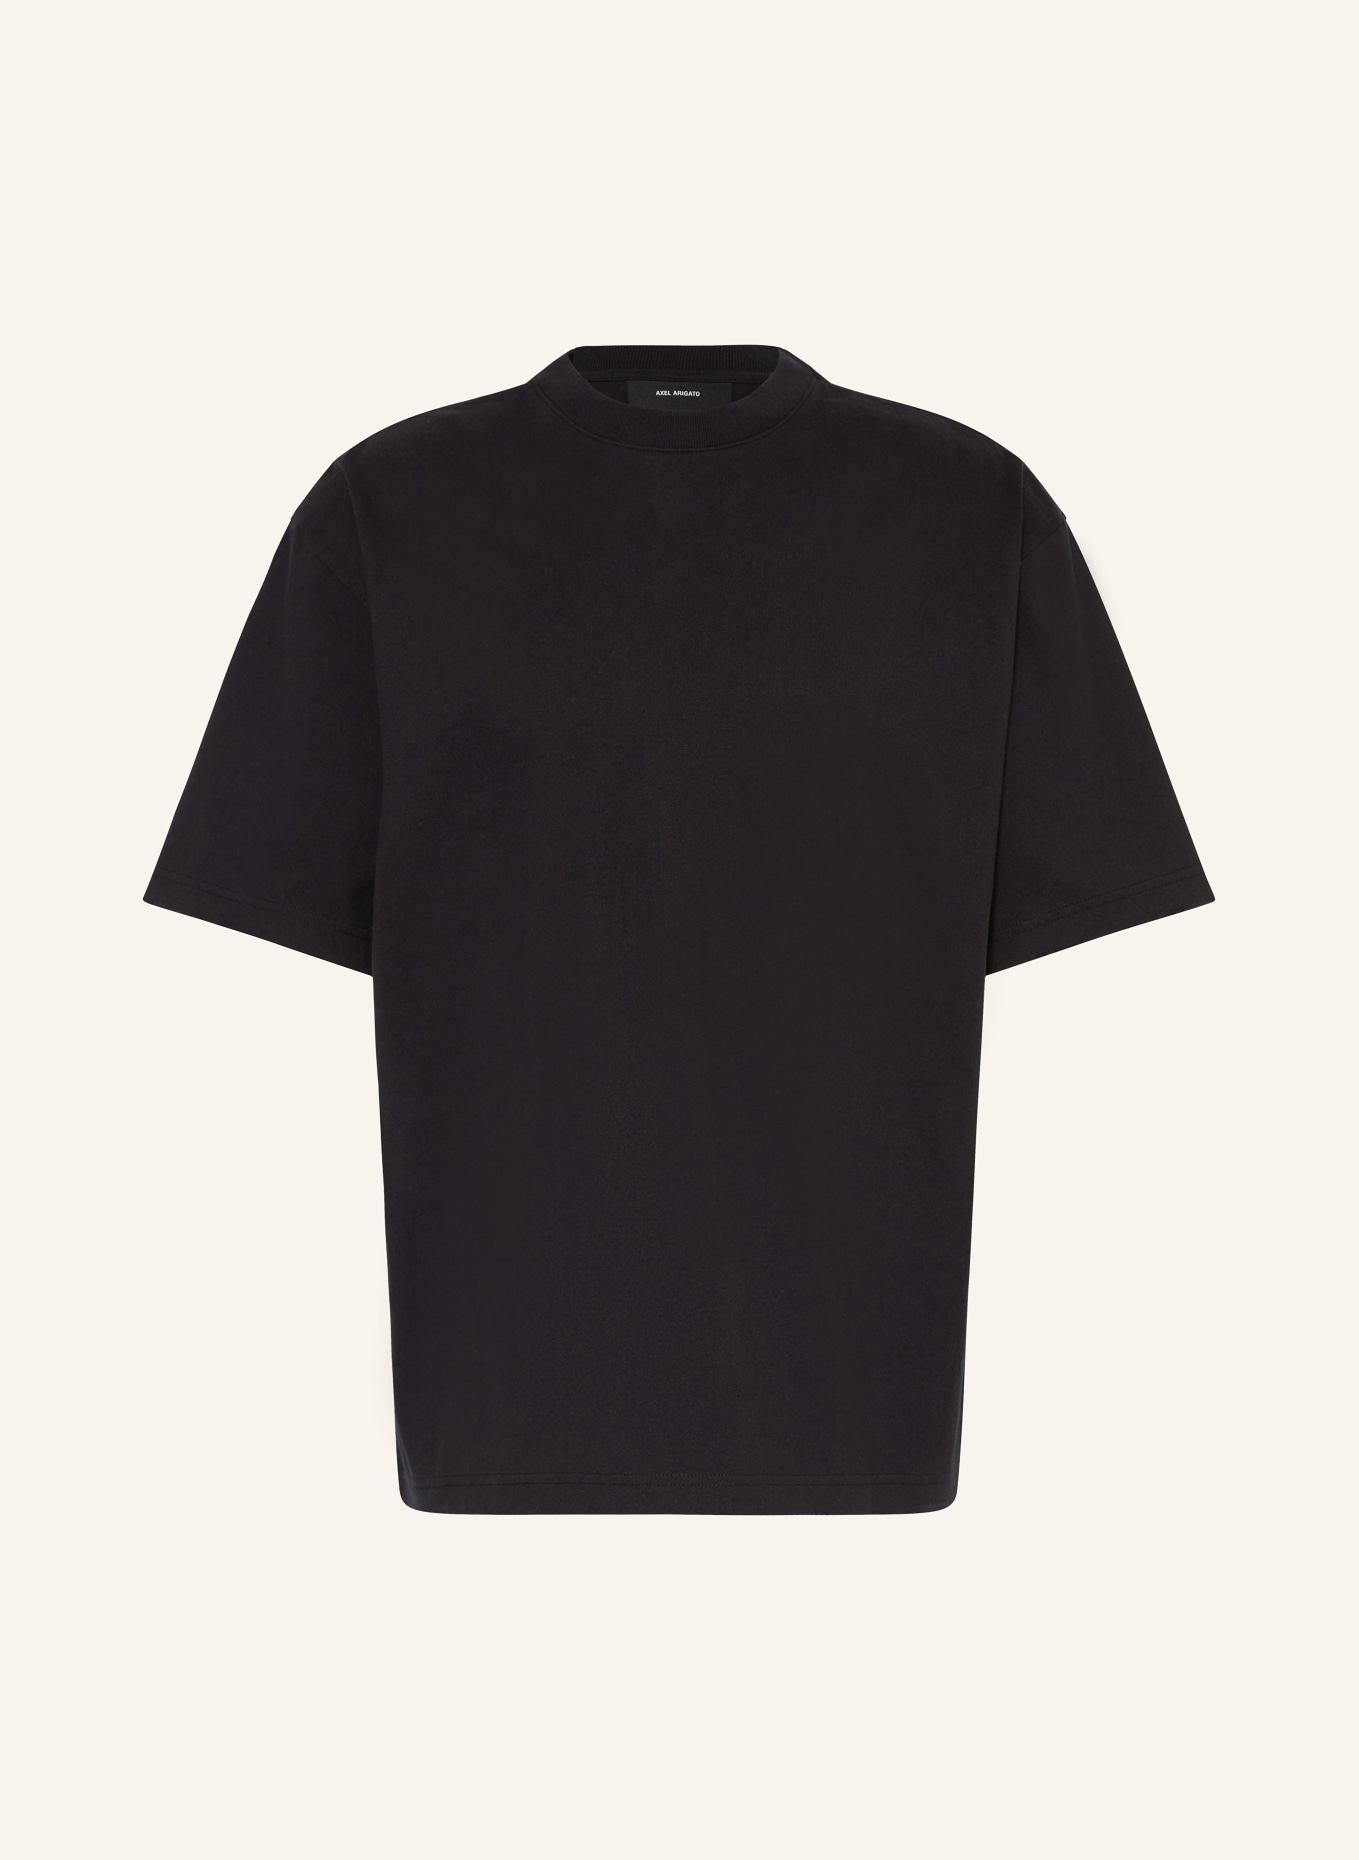 AXEL ARIGATO T-Shirt, Farbe: SCHWARZ (Bild 1)